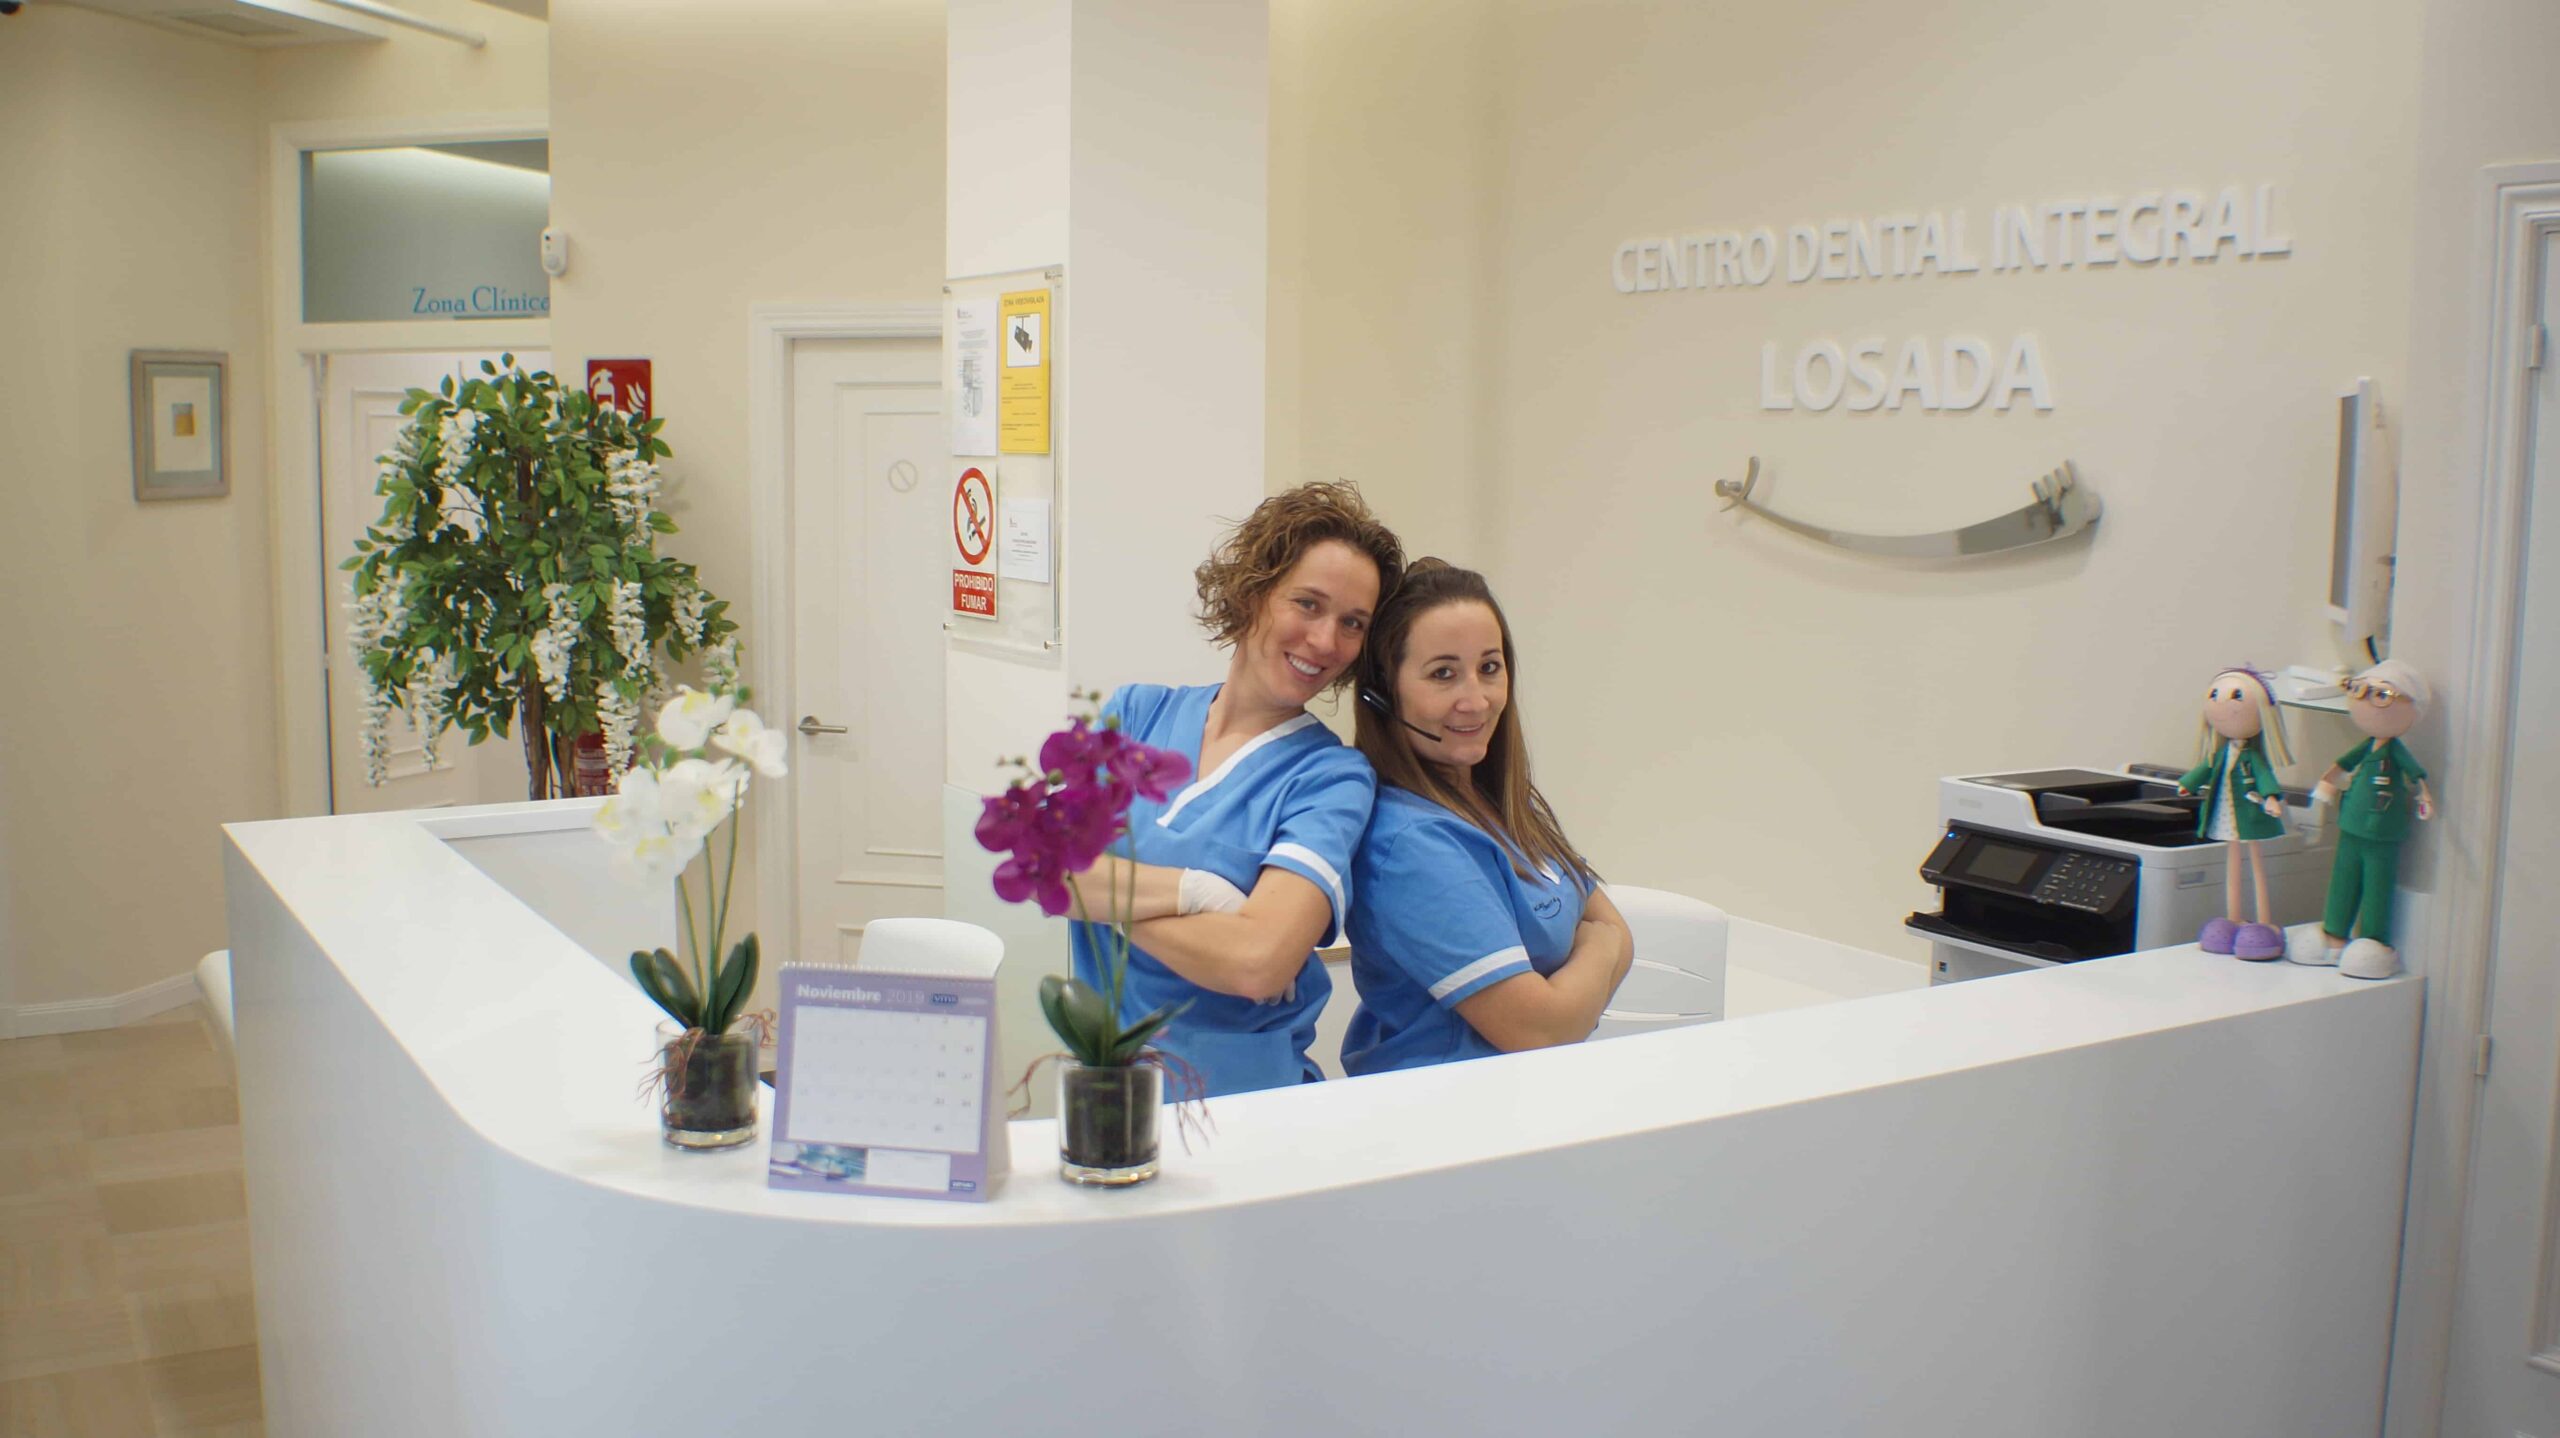 Centro dental Valladolid